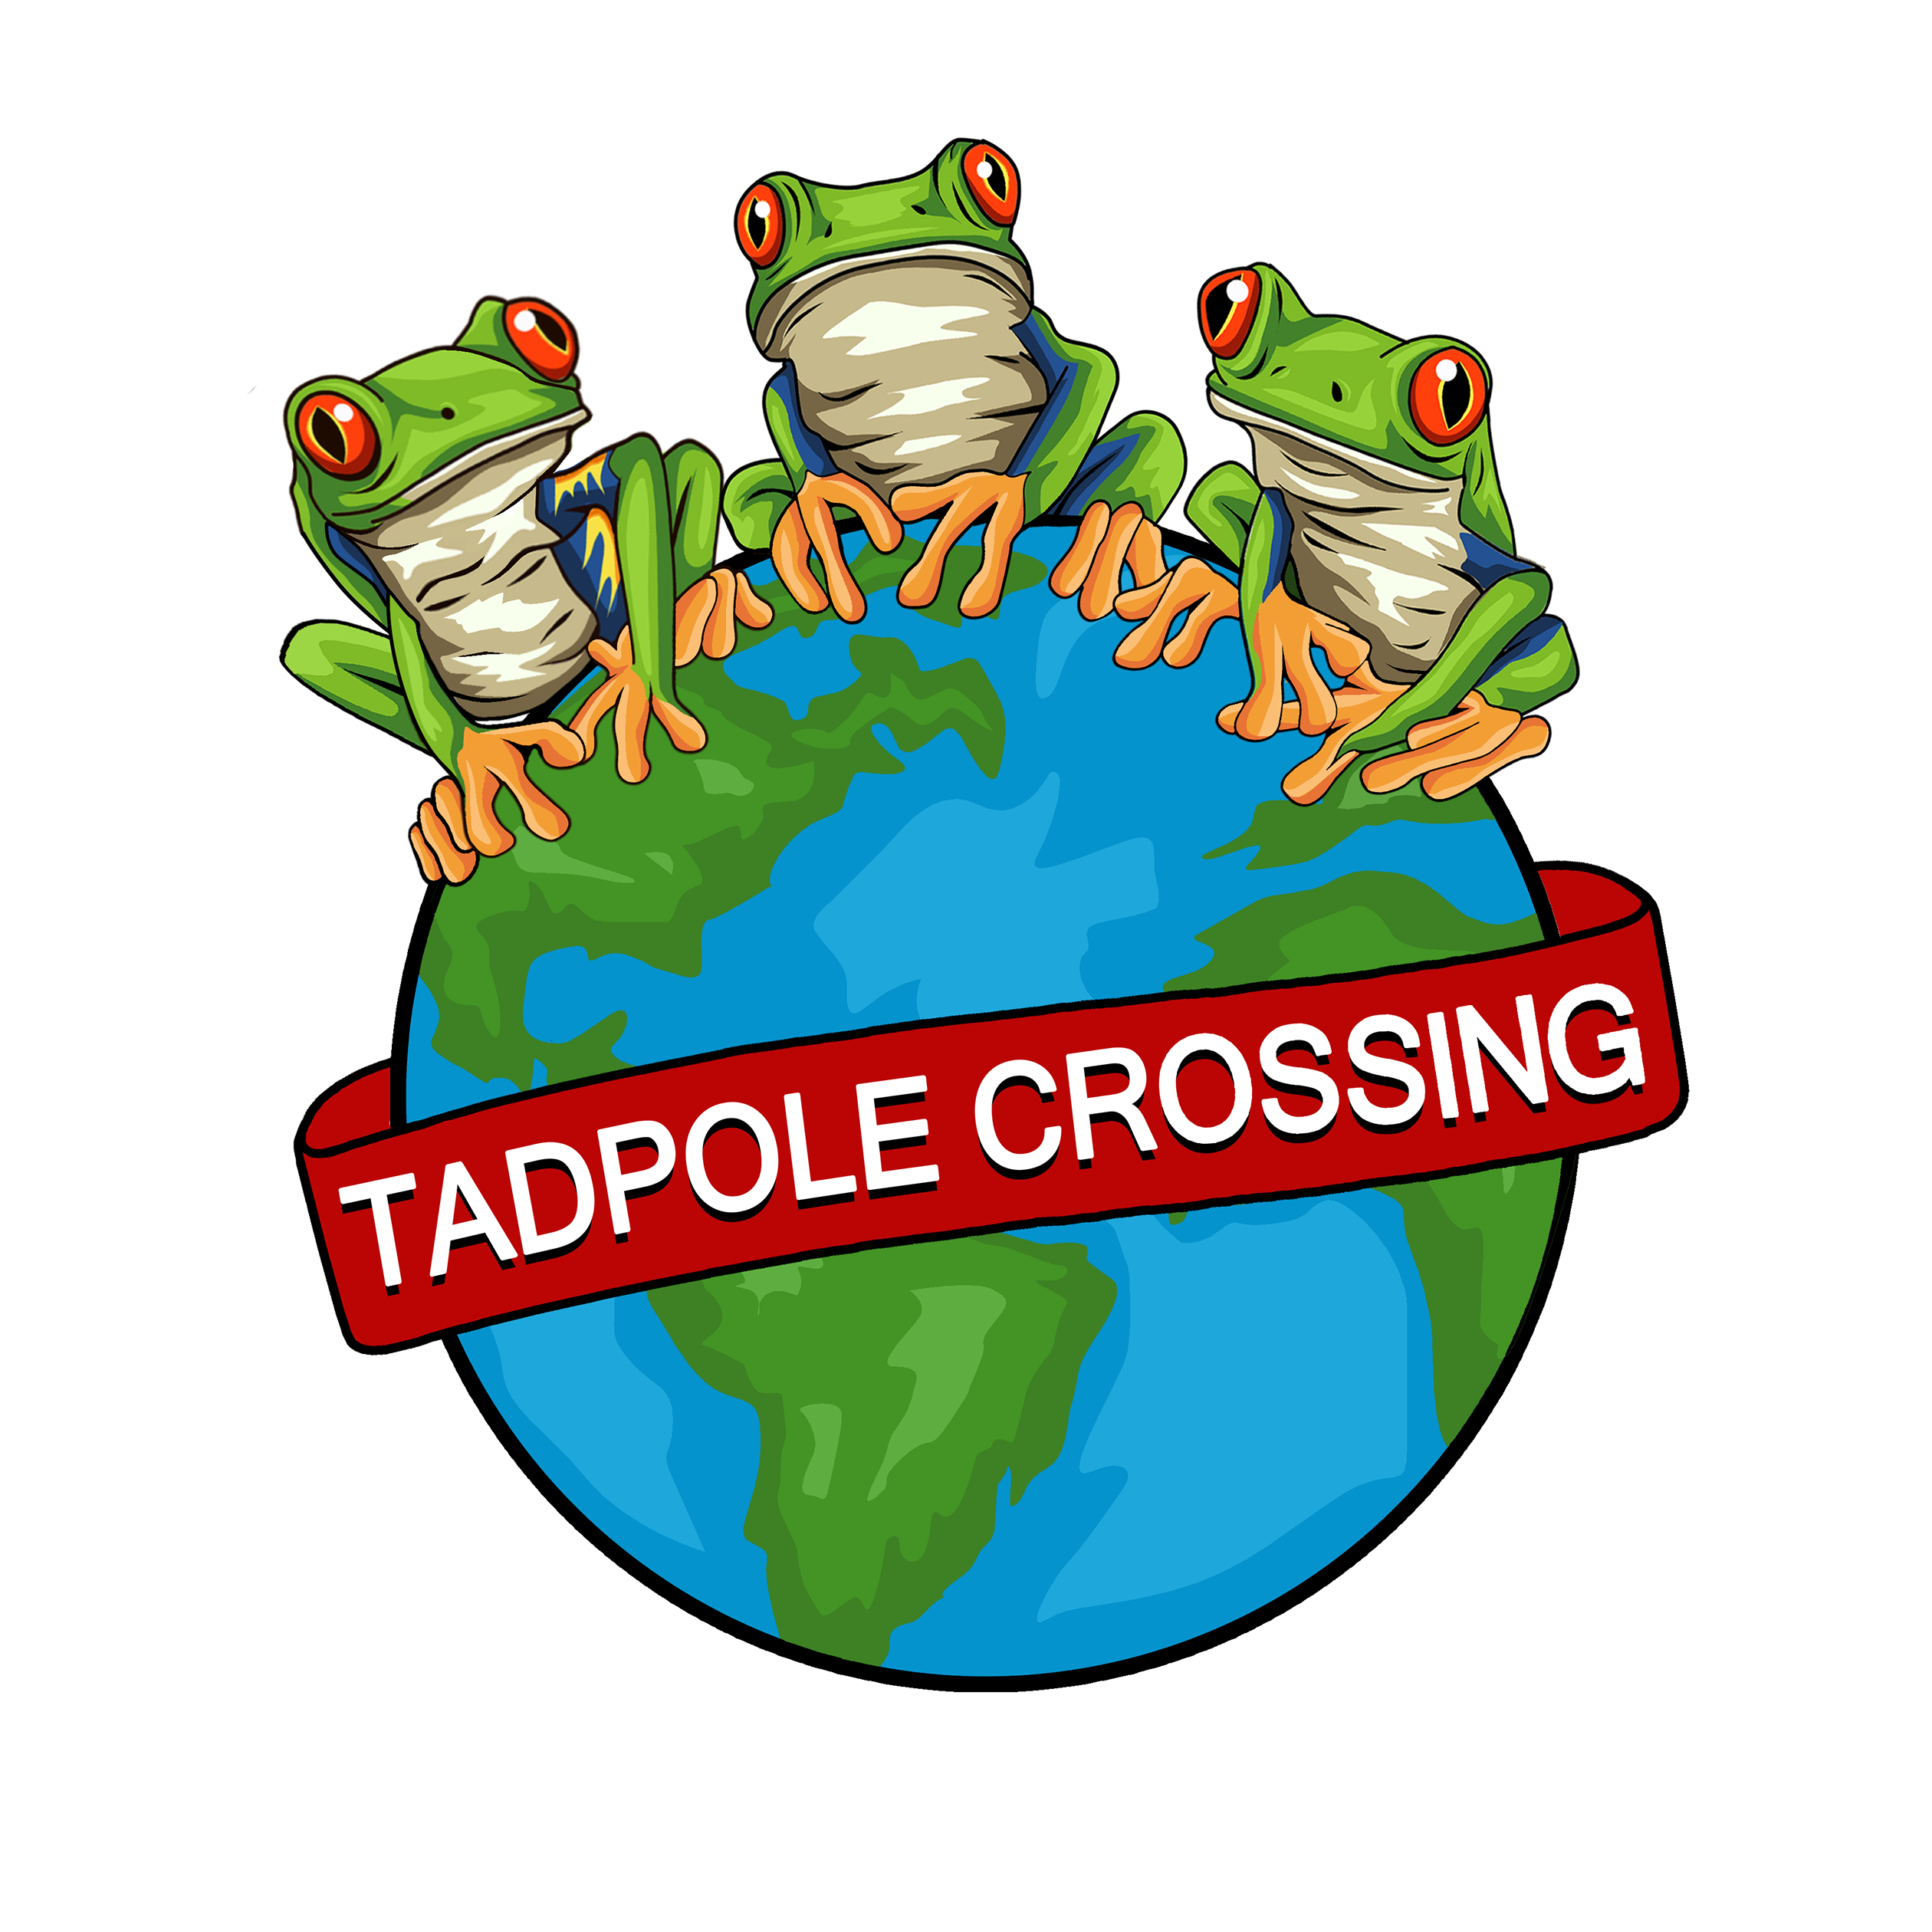 Tadpole Crossing